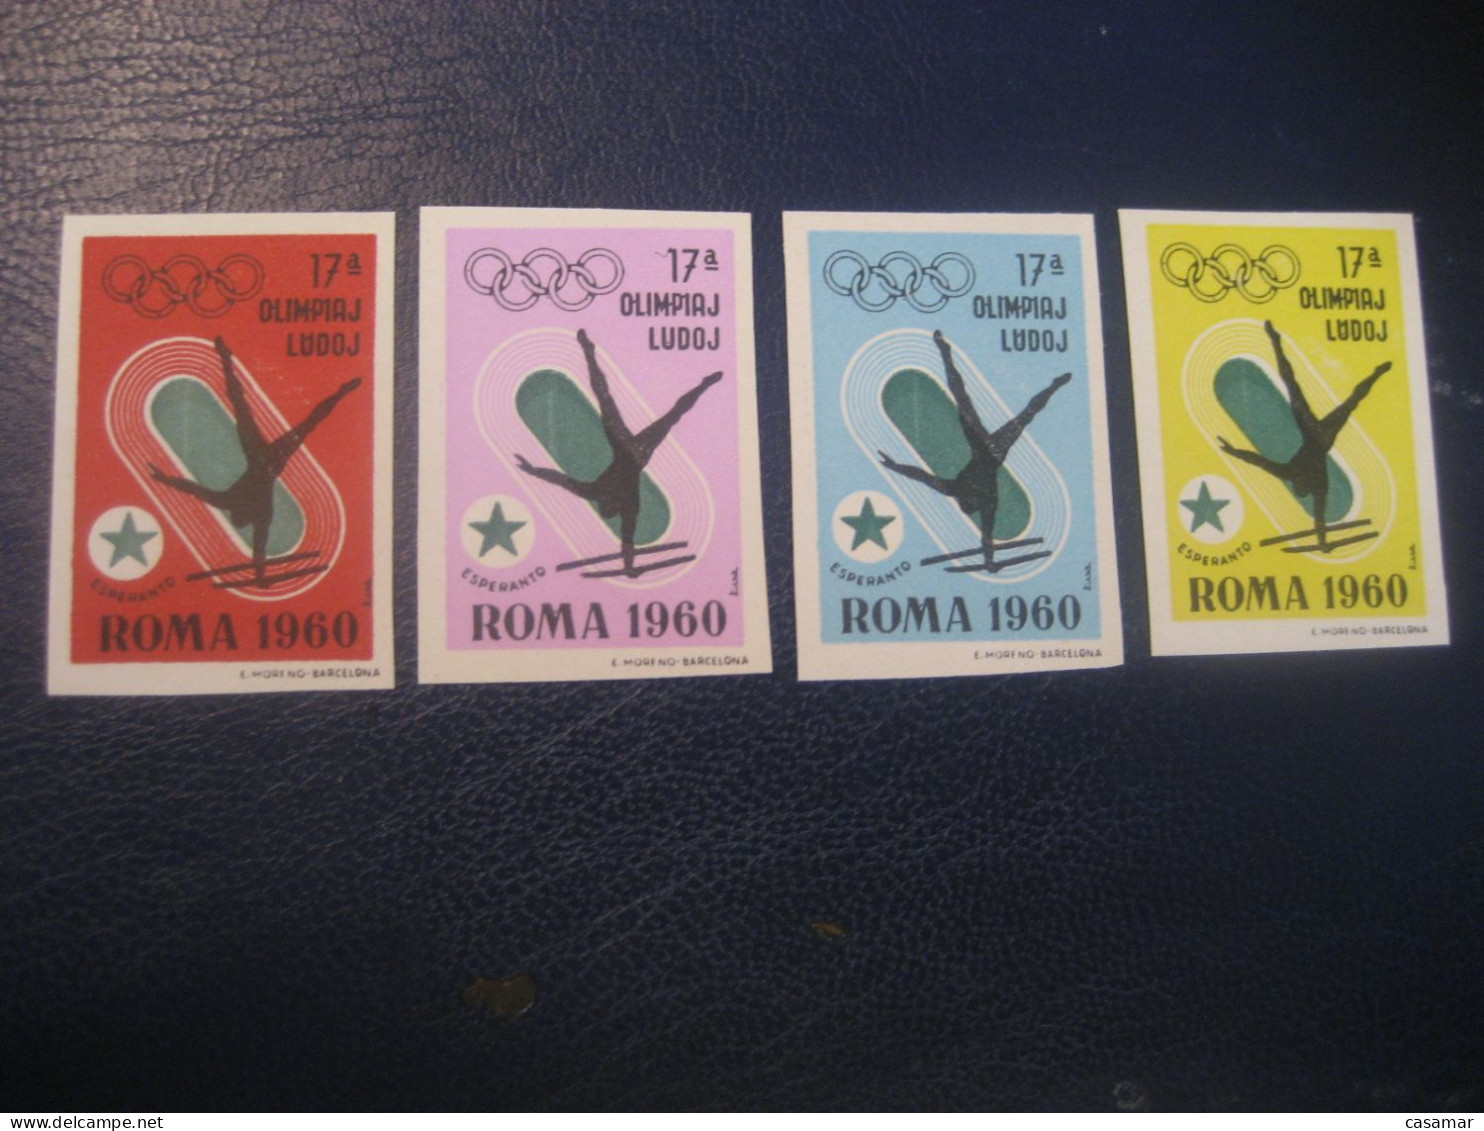 ROMA 1960 Gymnastics Gymnastique Olympic Games Olympics Esperanto 4 Imperforated Poster Stamp Vignette ITALY Spain Label - Gymnastiek